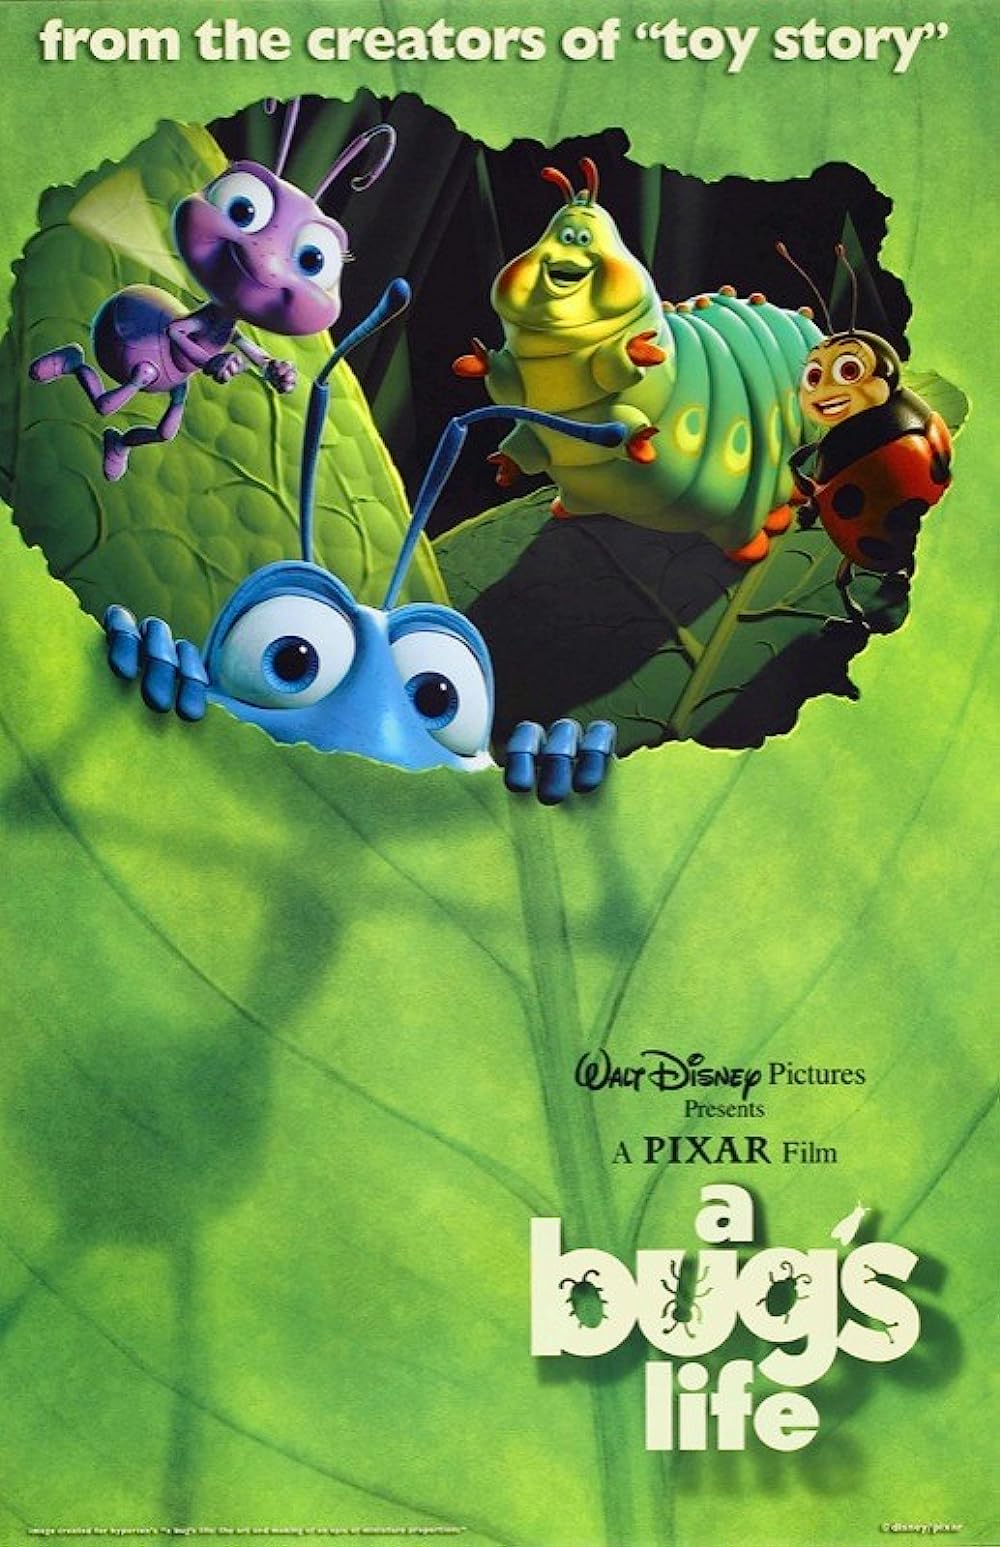 FULL MOVIE: A Bug’s Life (1998)